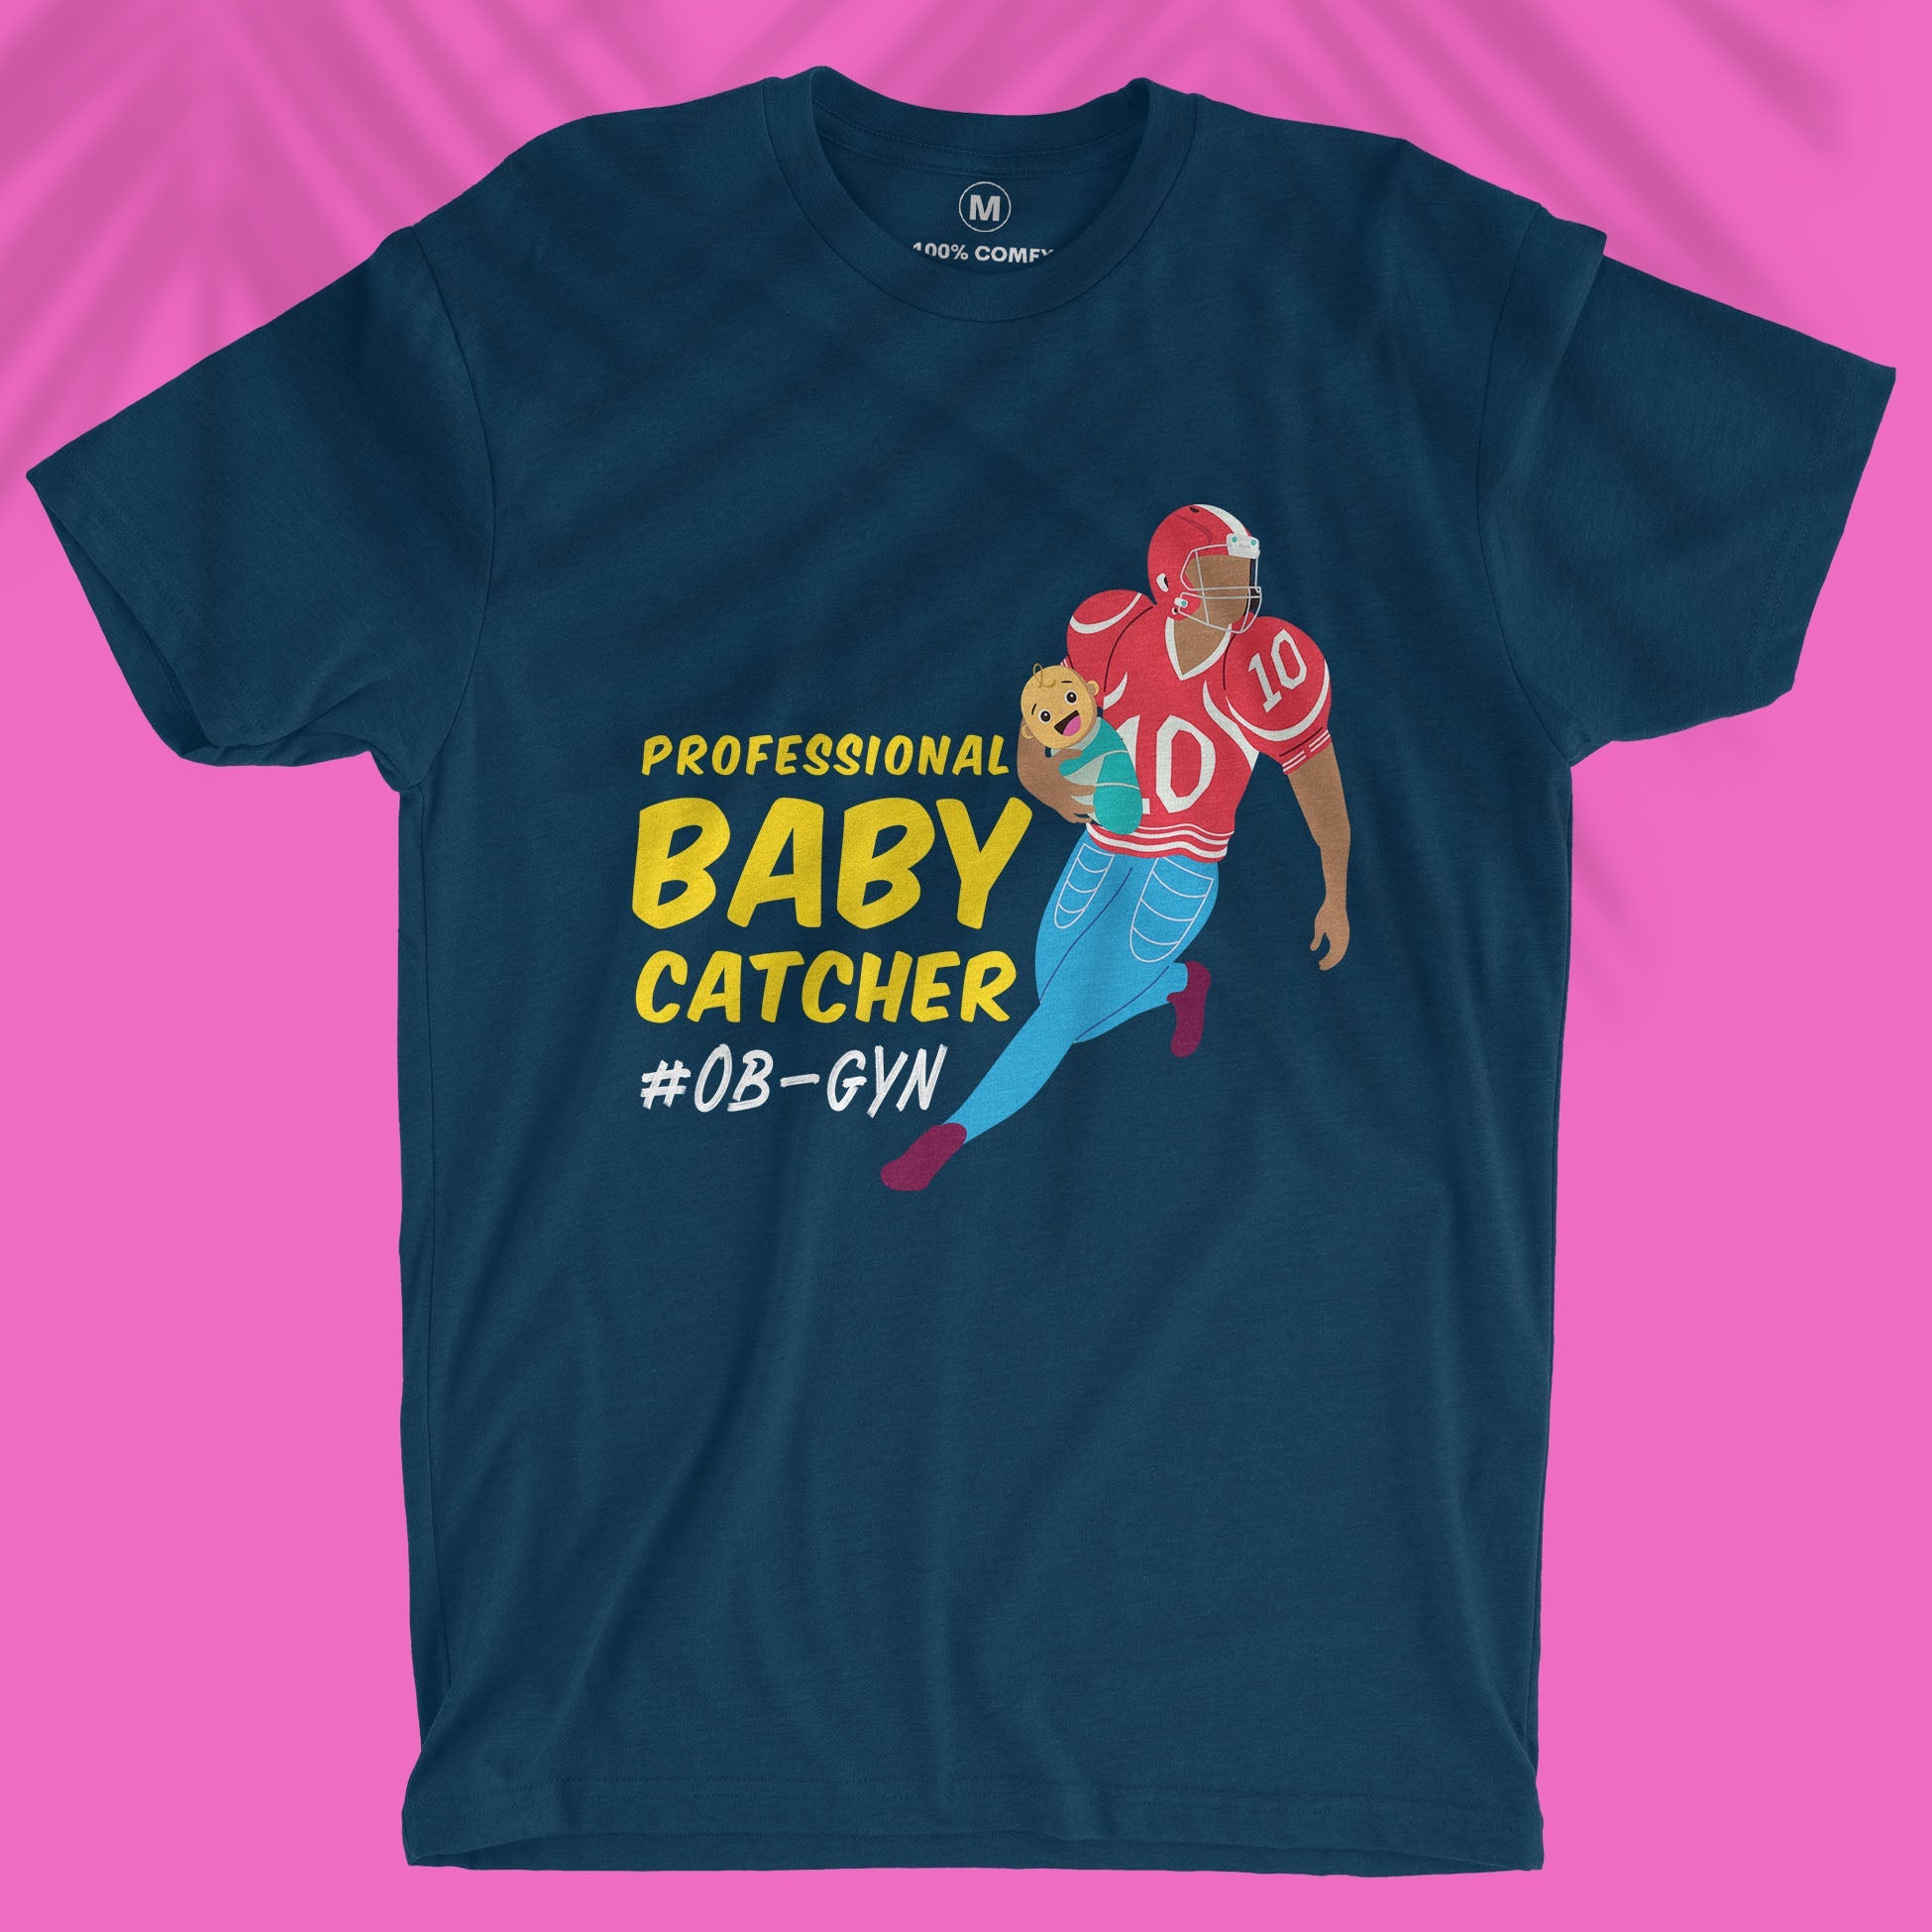 Professional Baby Catcher - Unisex T-shirt